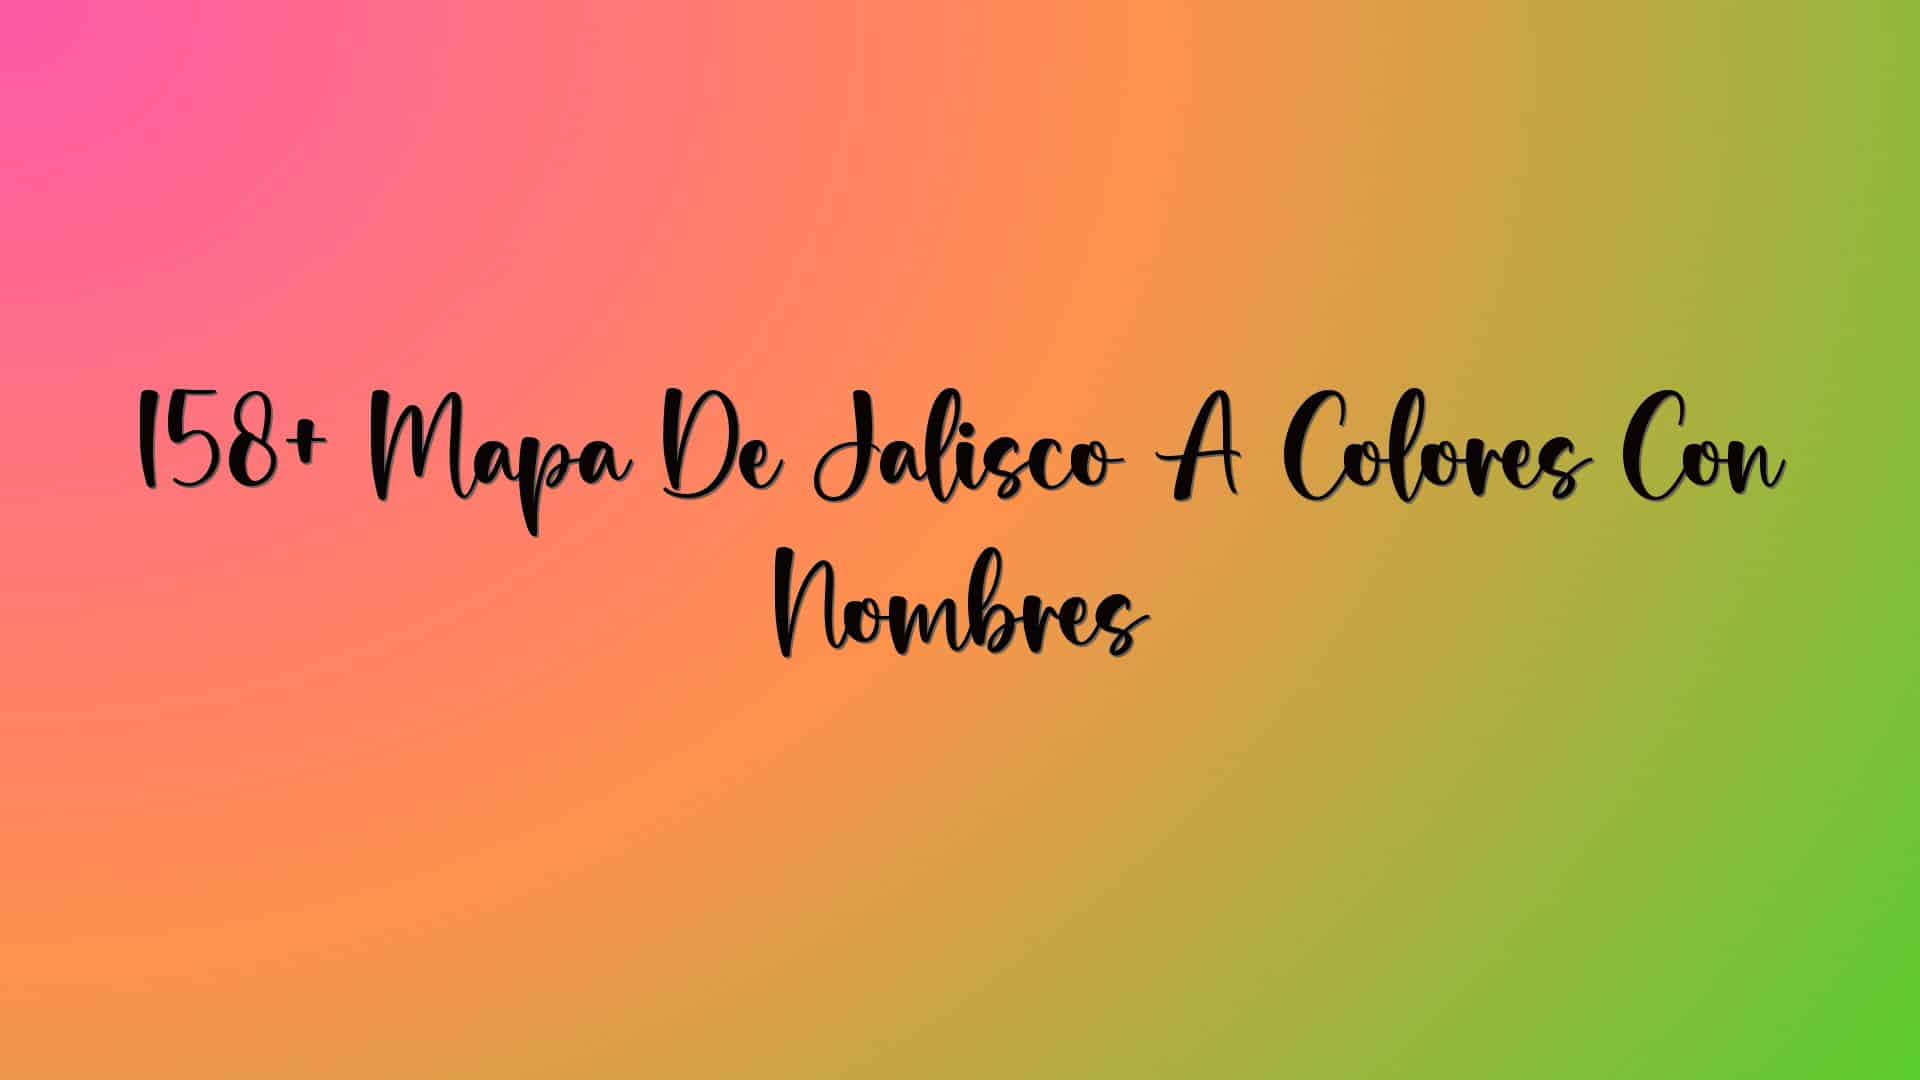 158+ Mapa De Jalisco A Colores Con Nombres